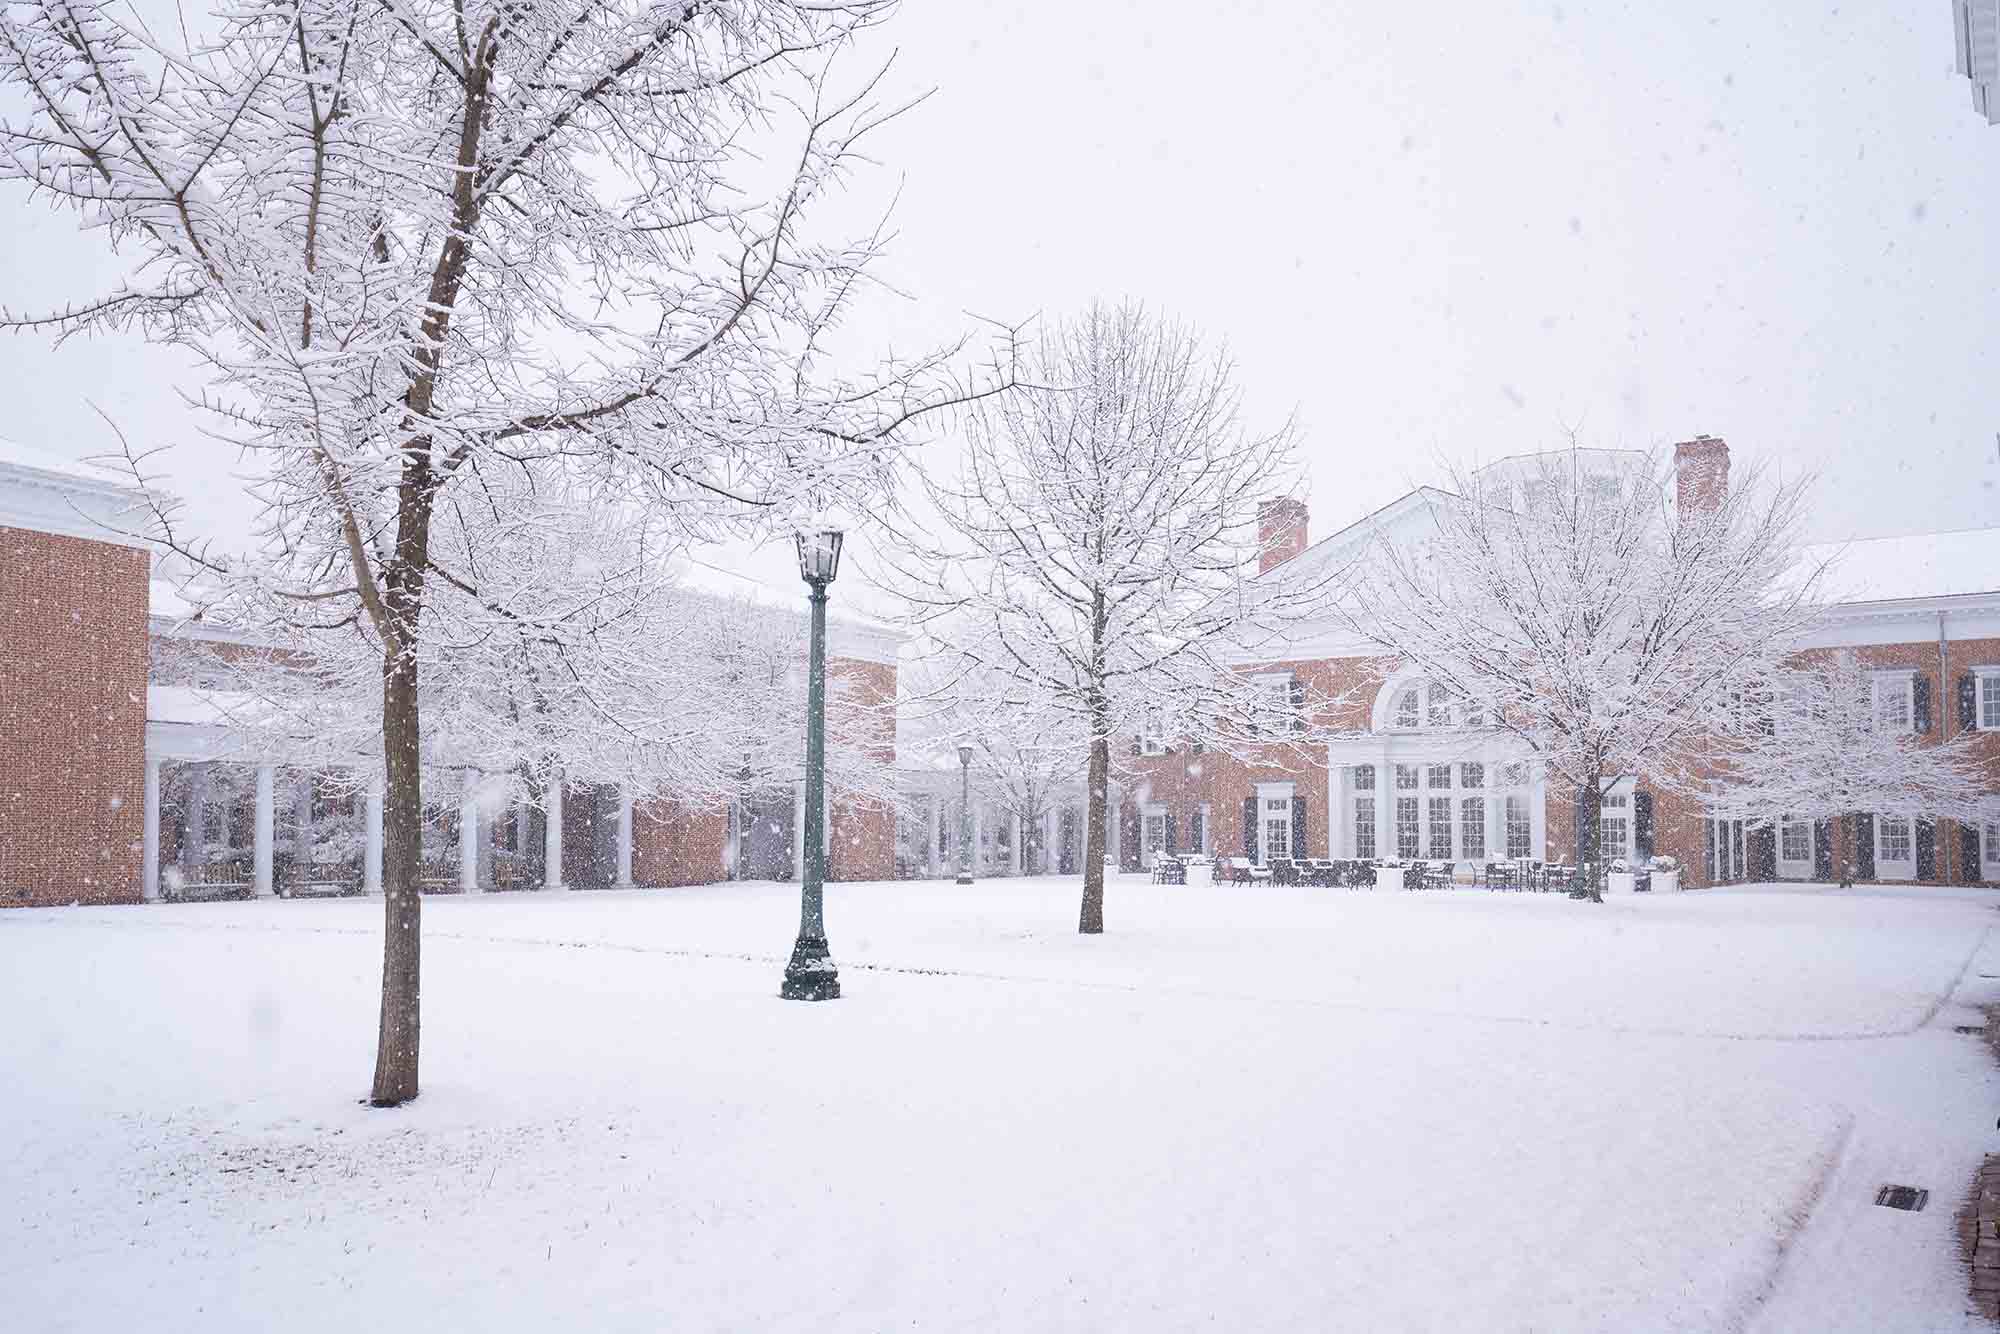 UVA Darden School in the Snow